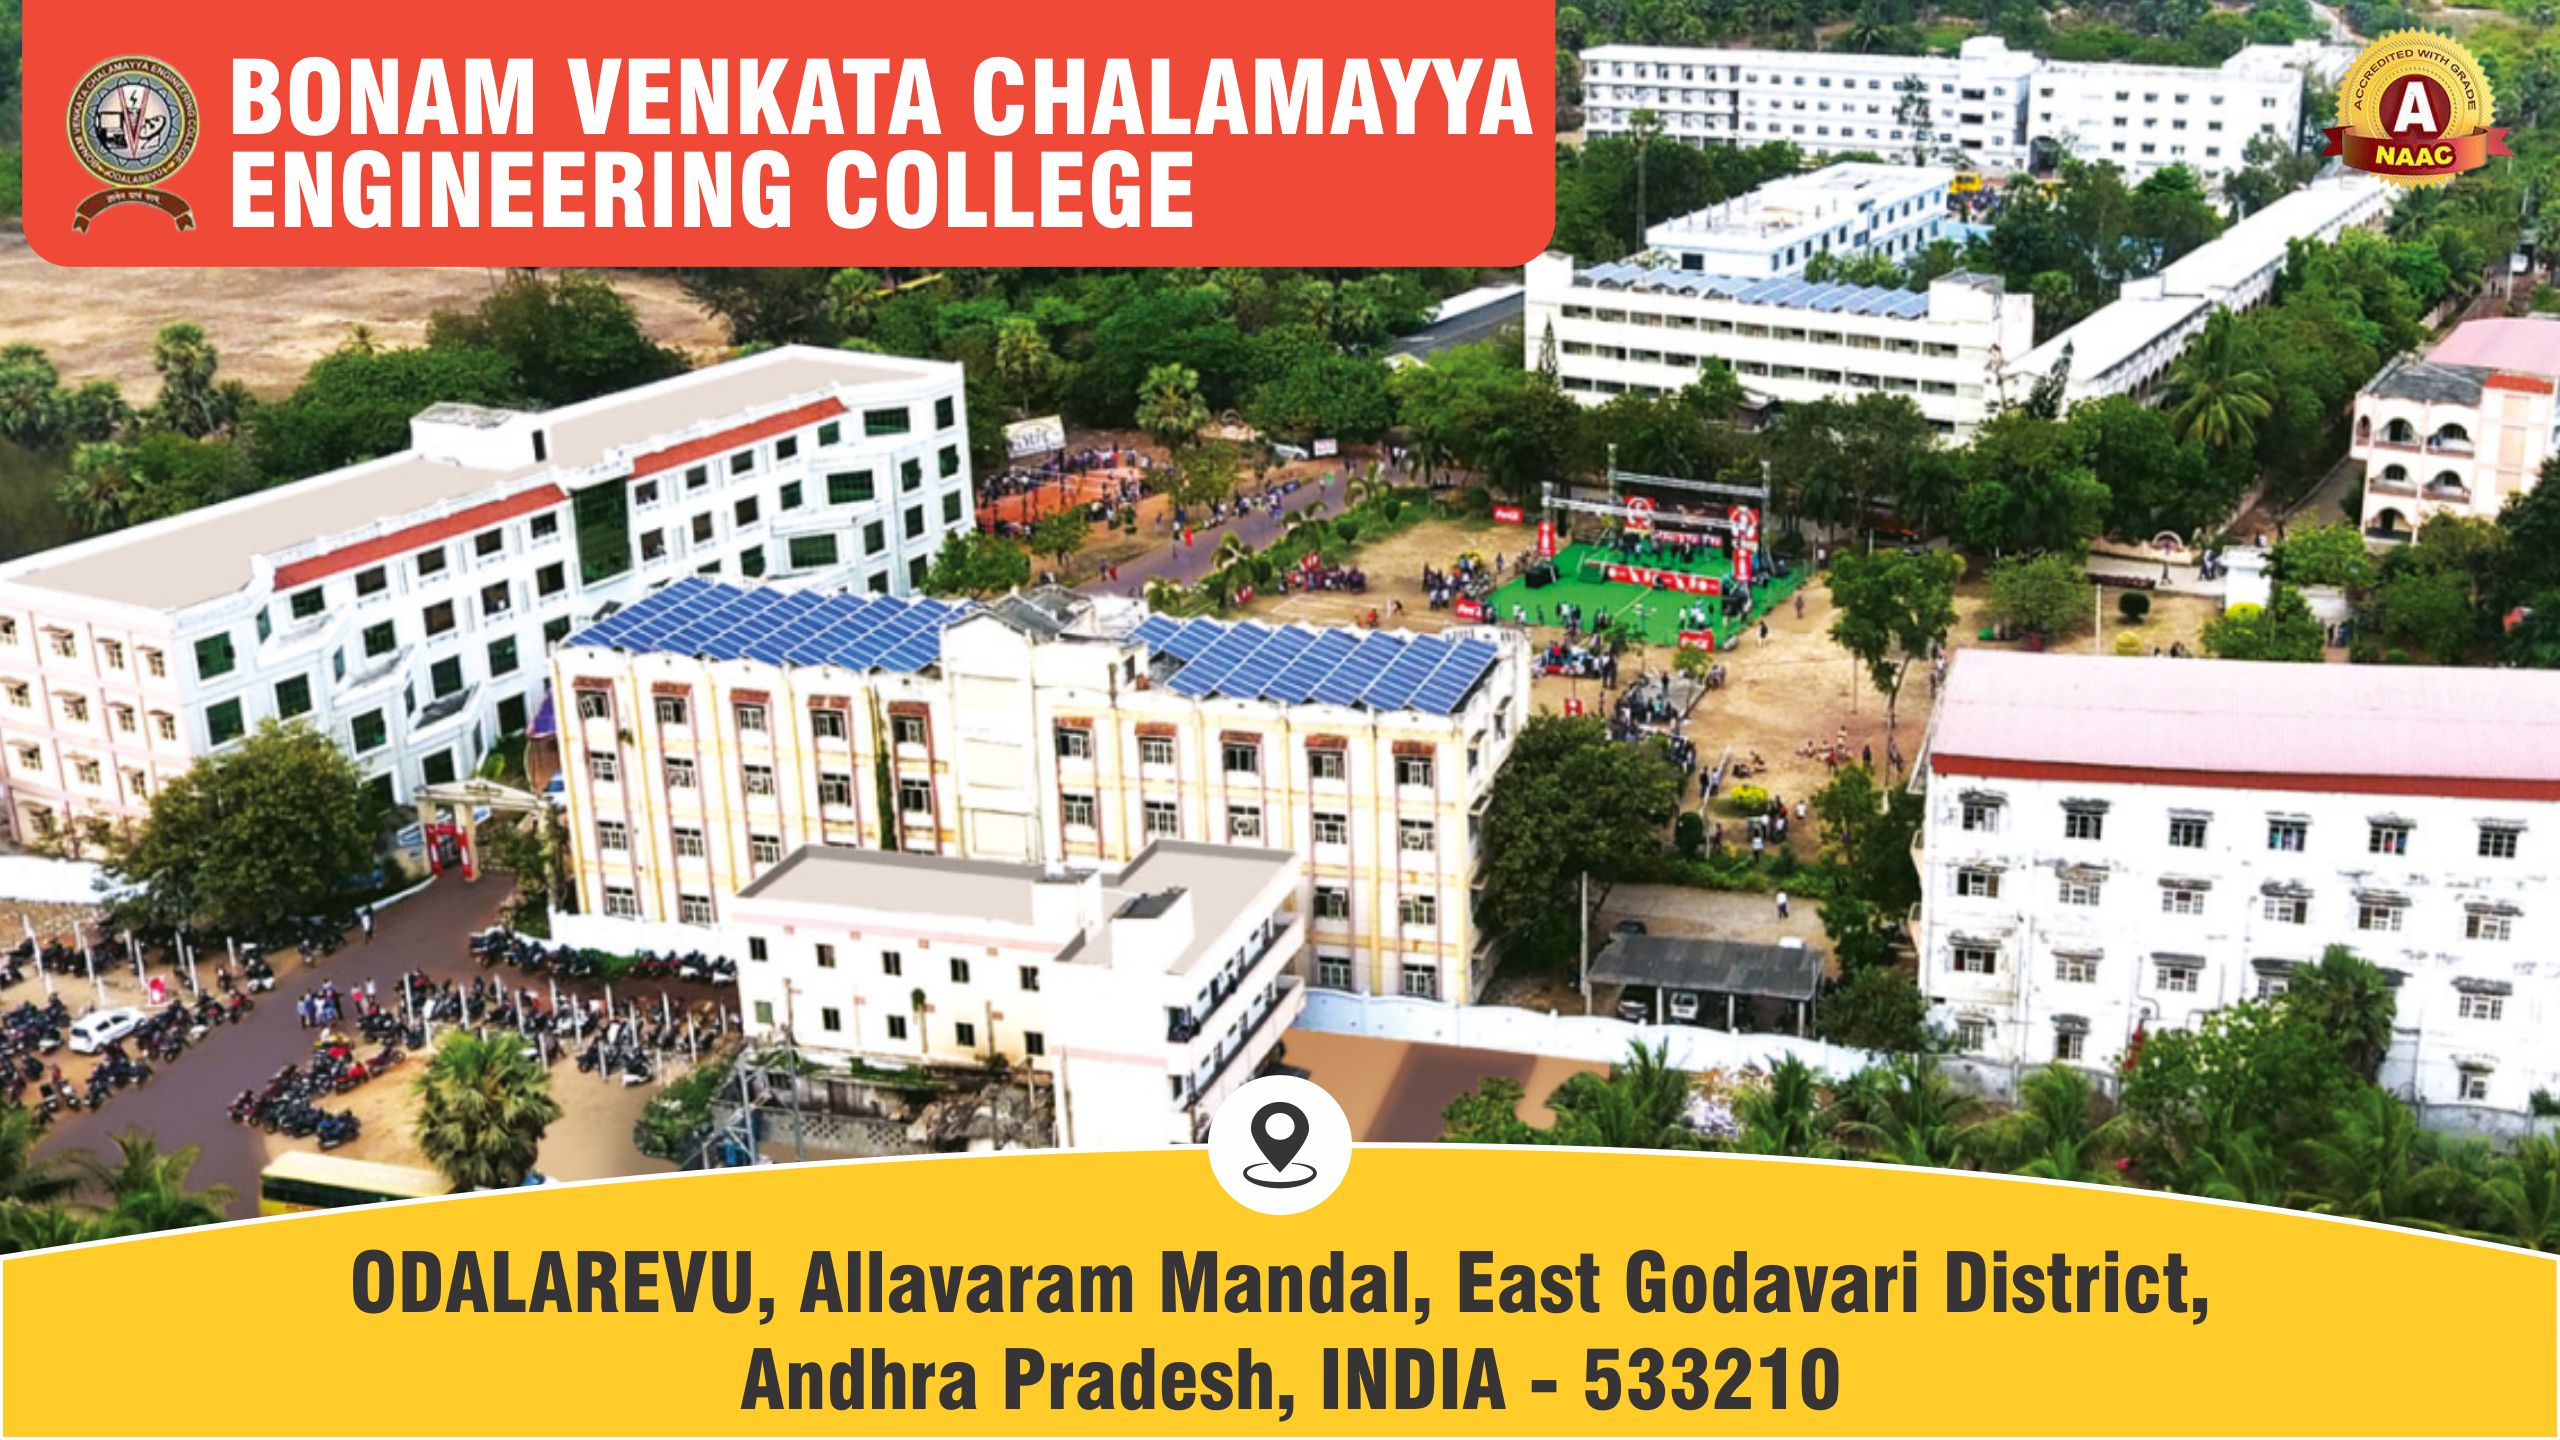 Out Side View of Bonam Venkata Chalamayya Engineering College - BVCEC